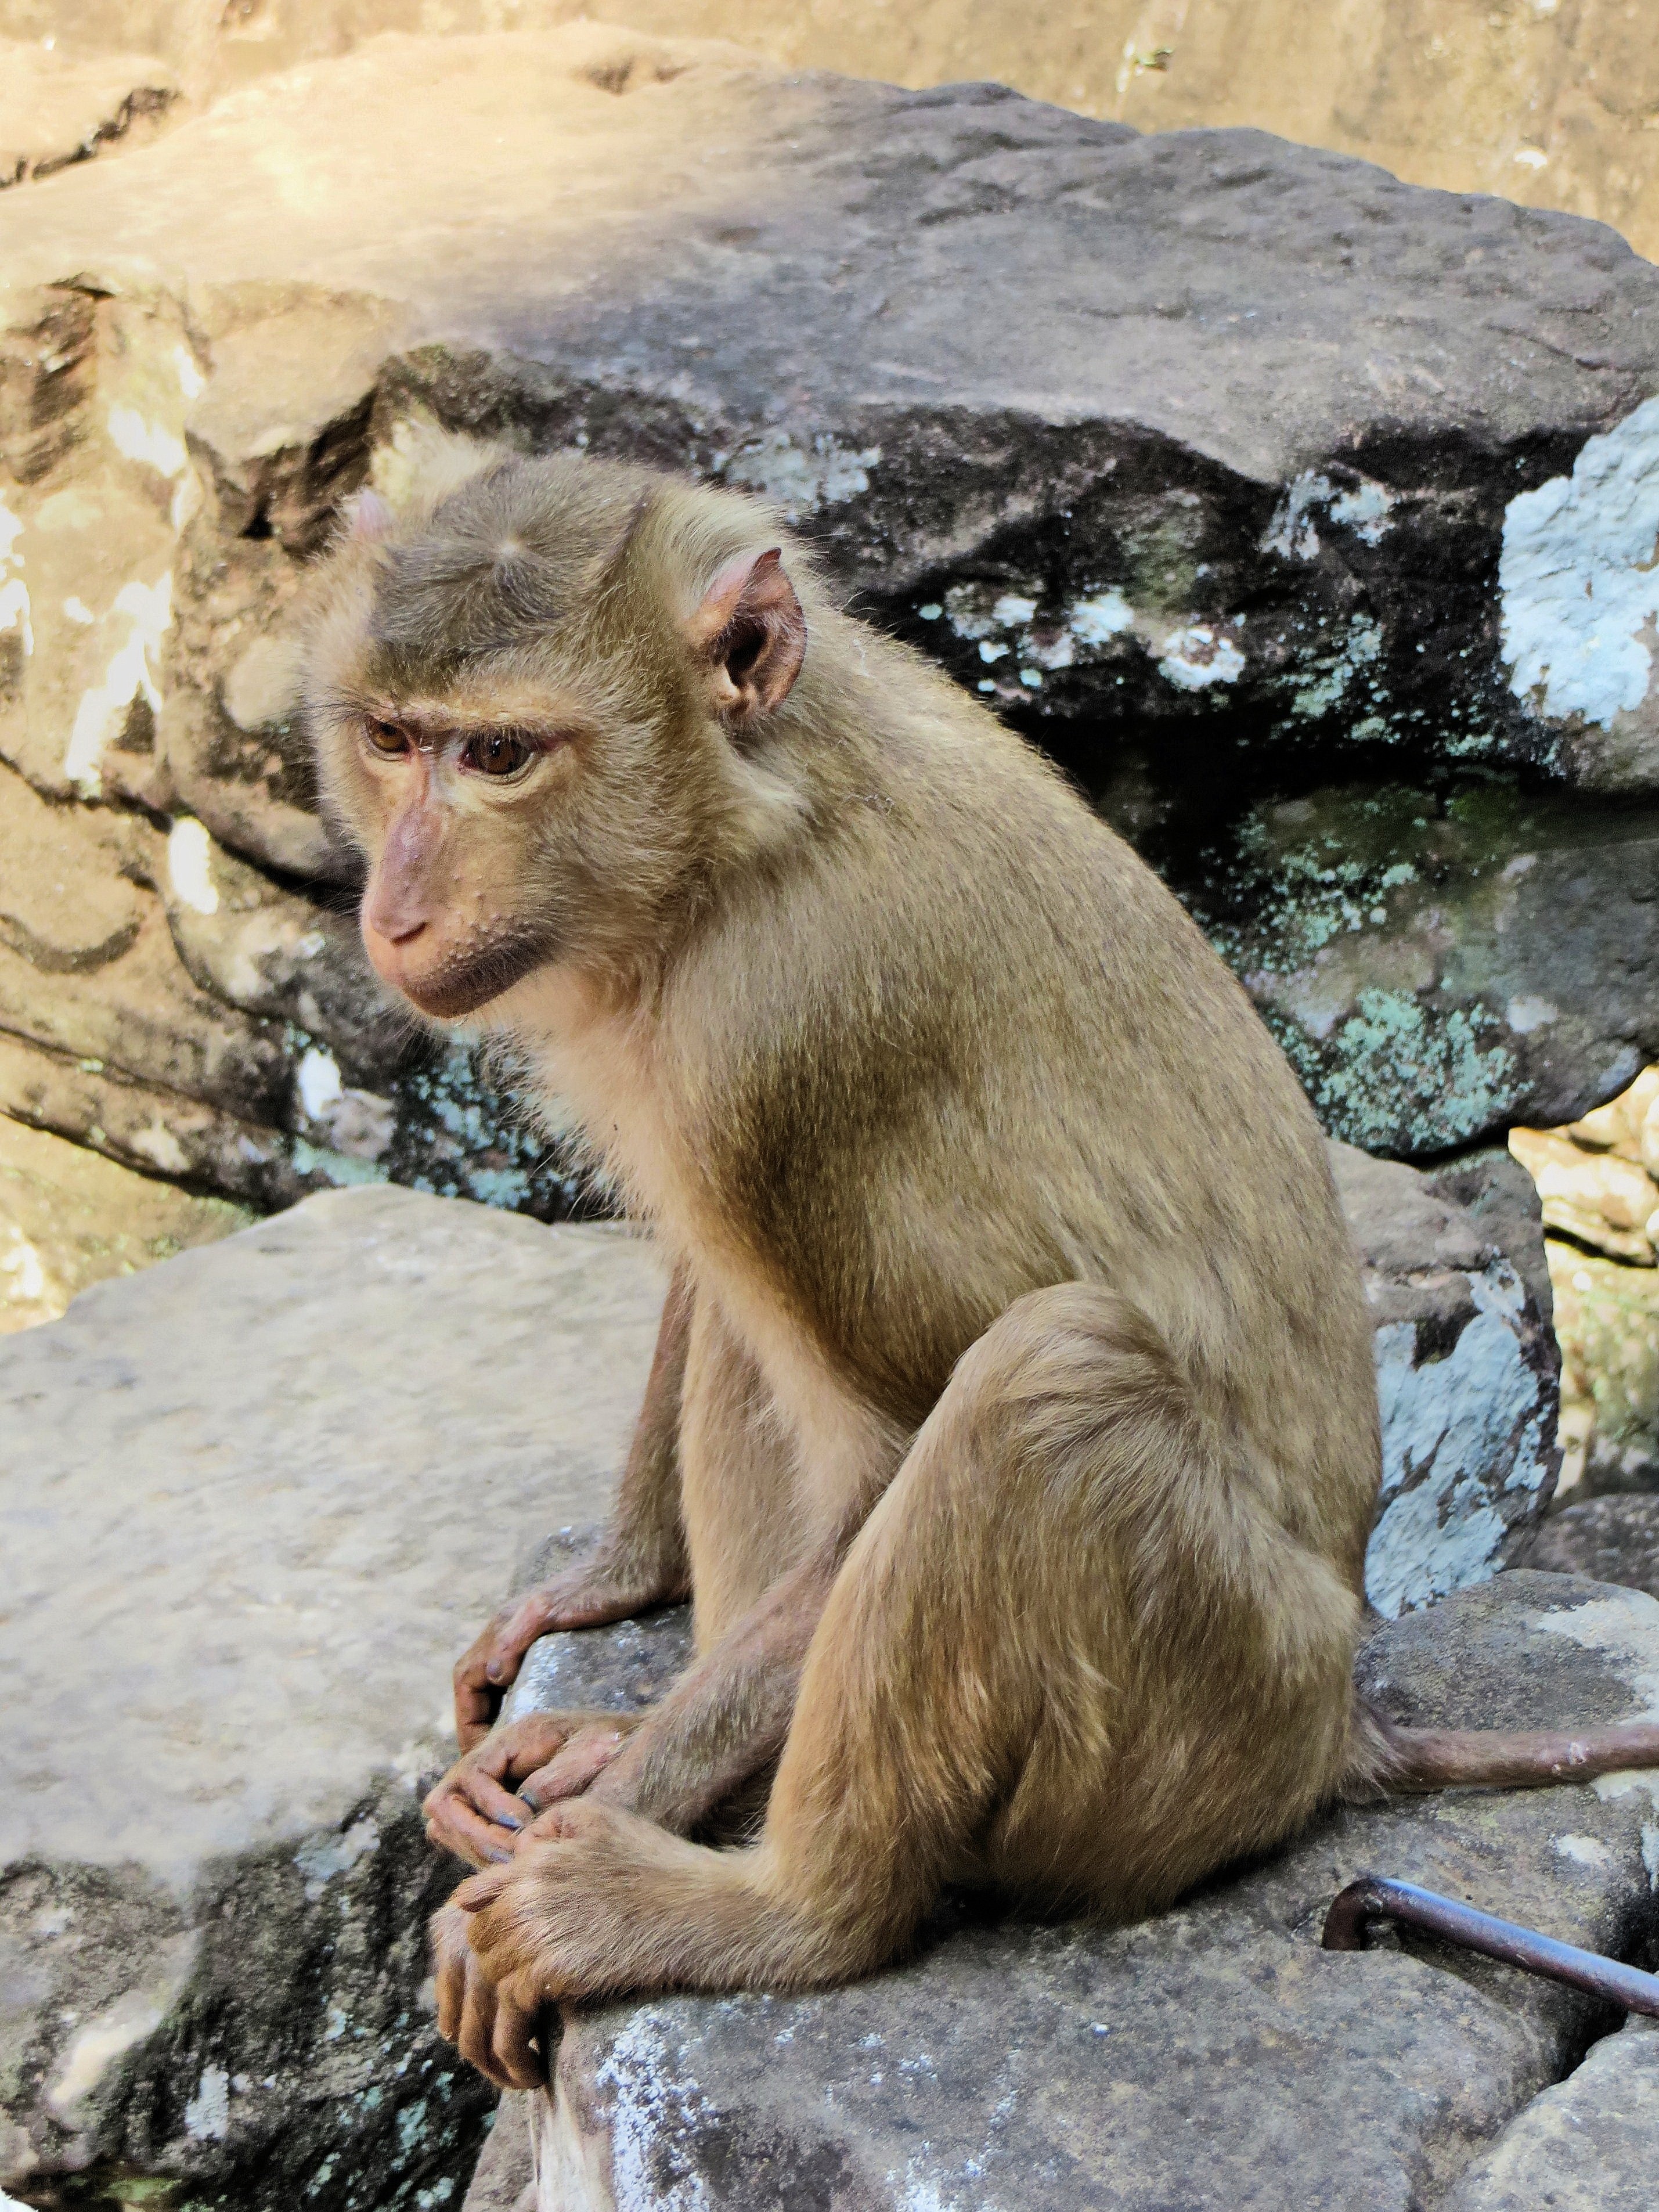 brown macaque